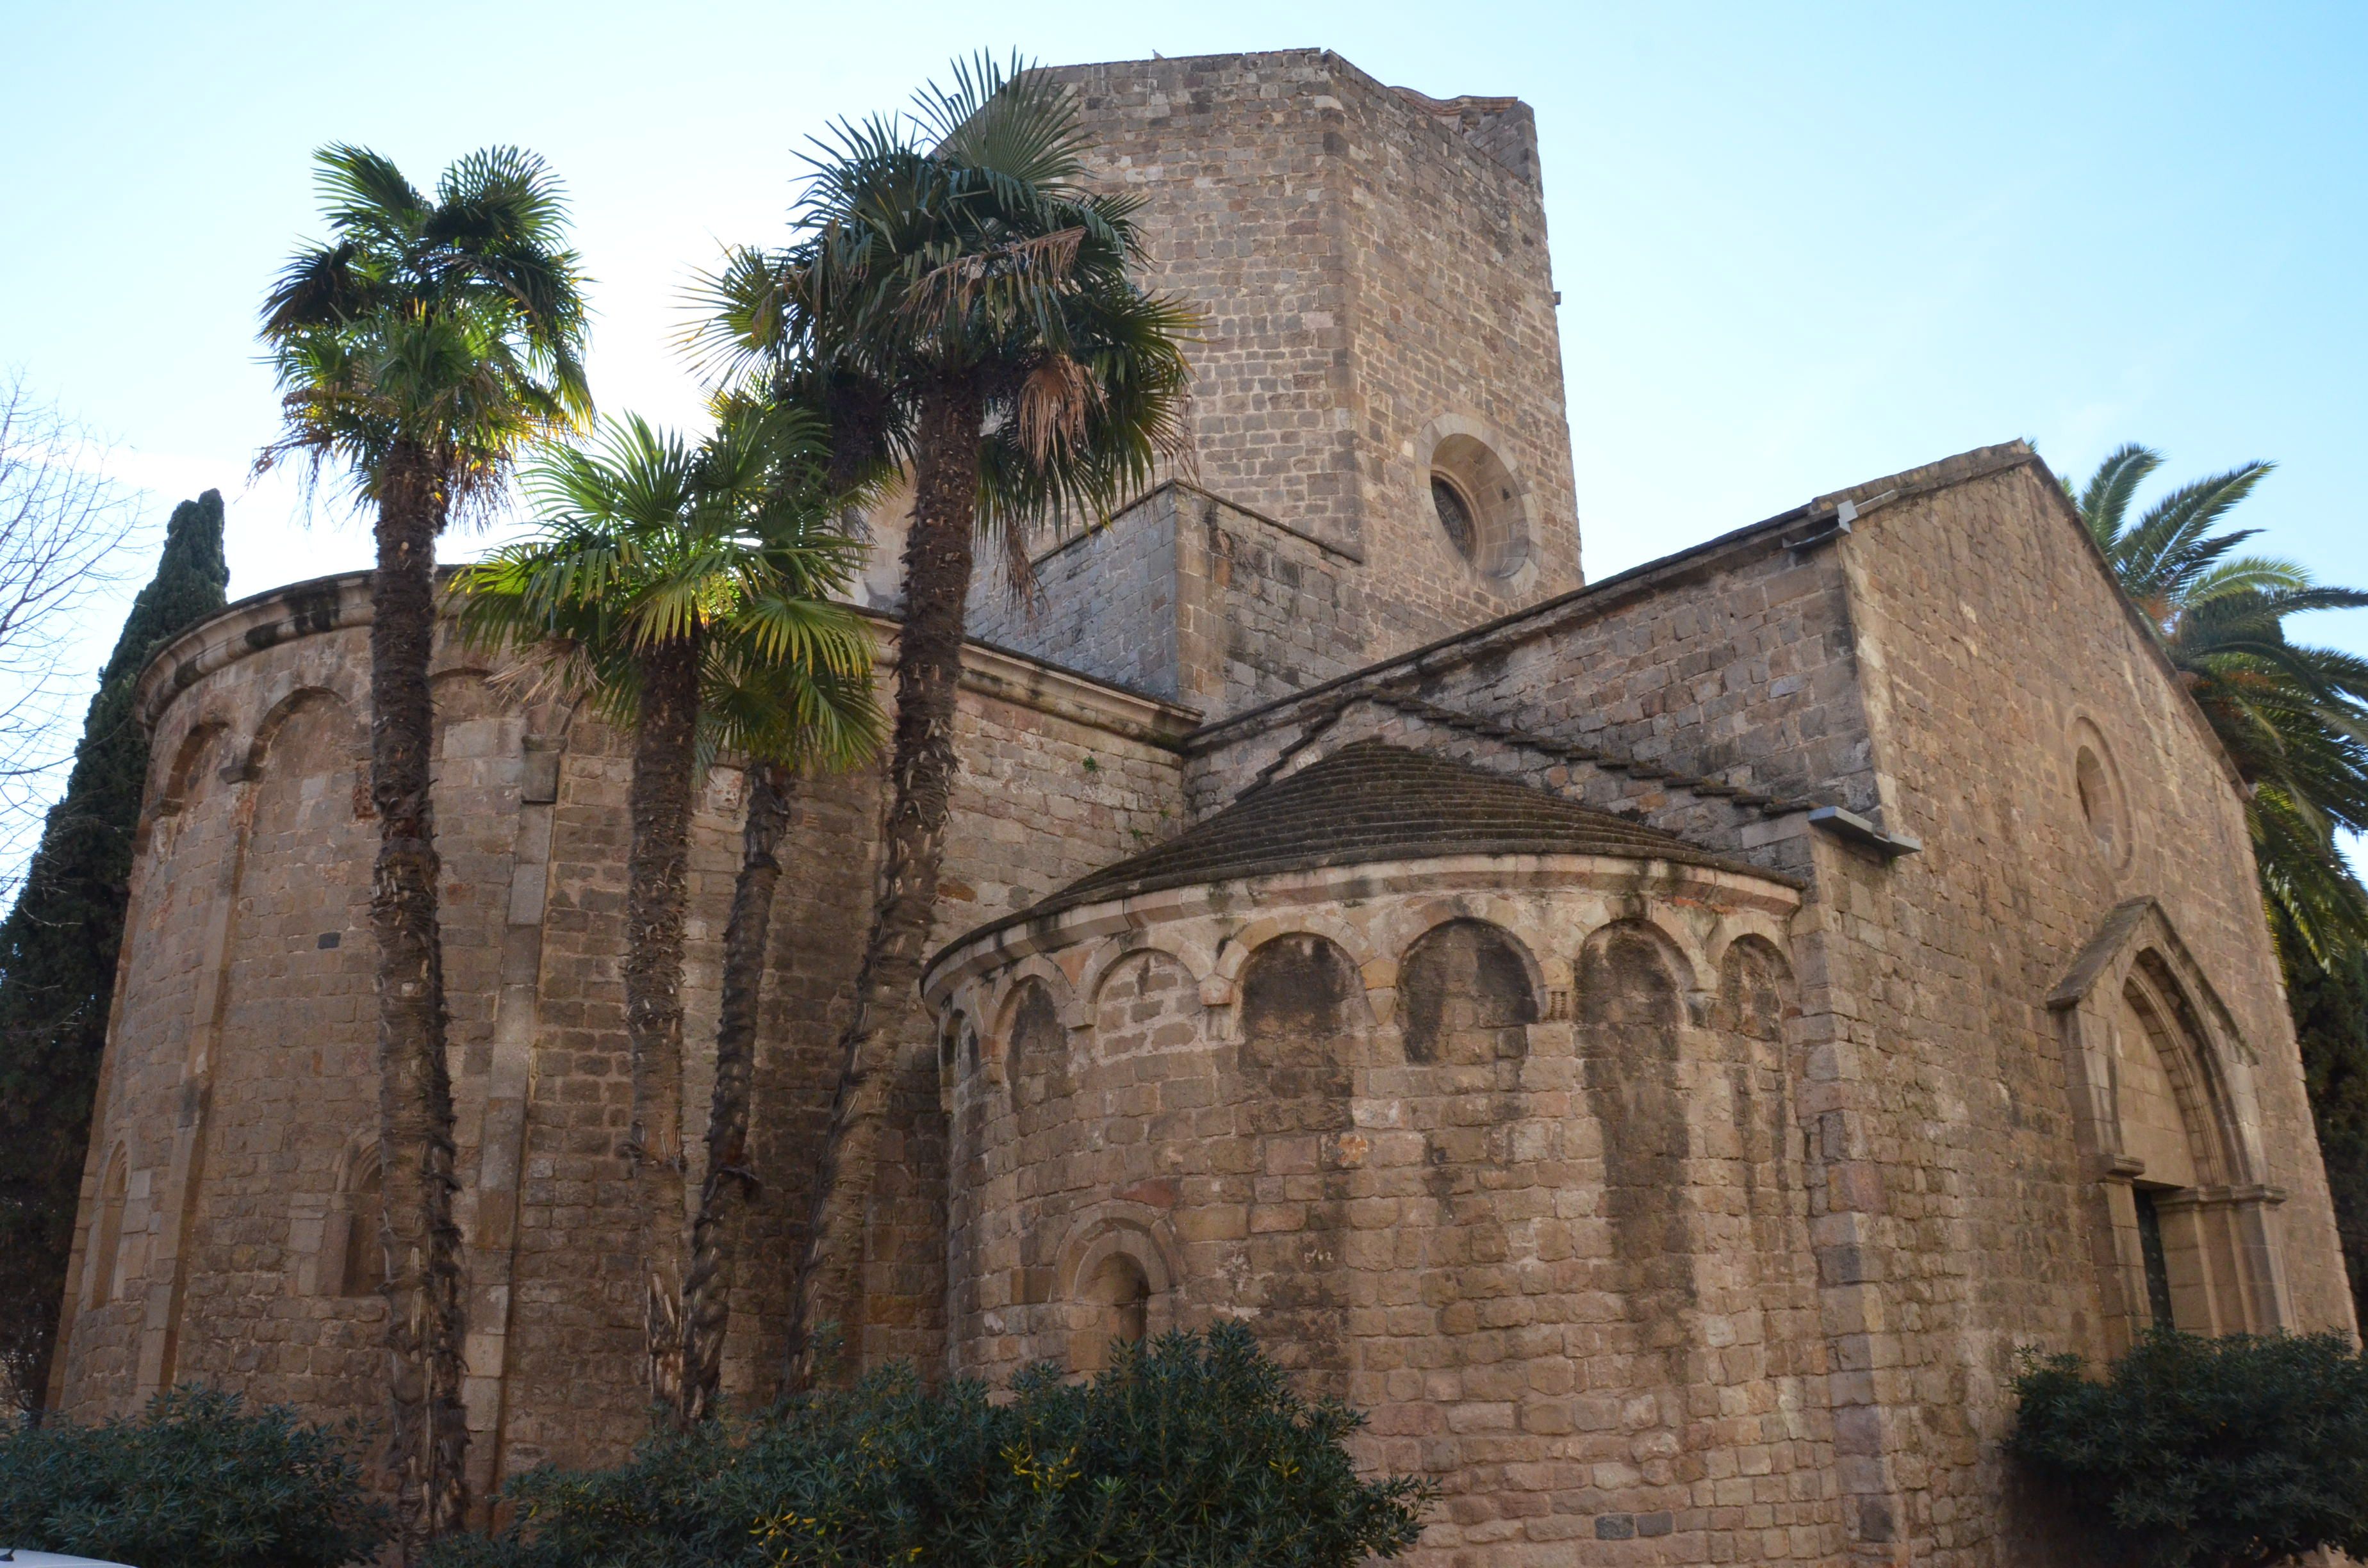 Monastery of Sant Pau del Camp, Barcelona: All year